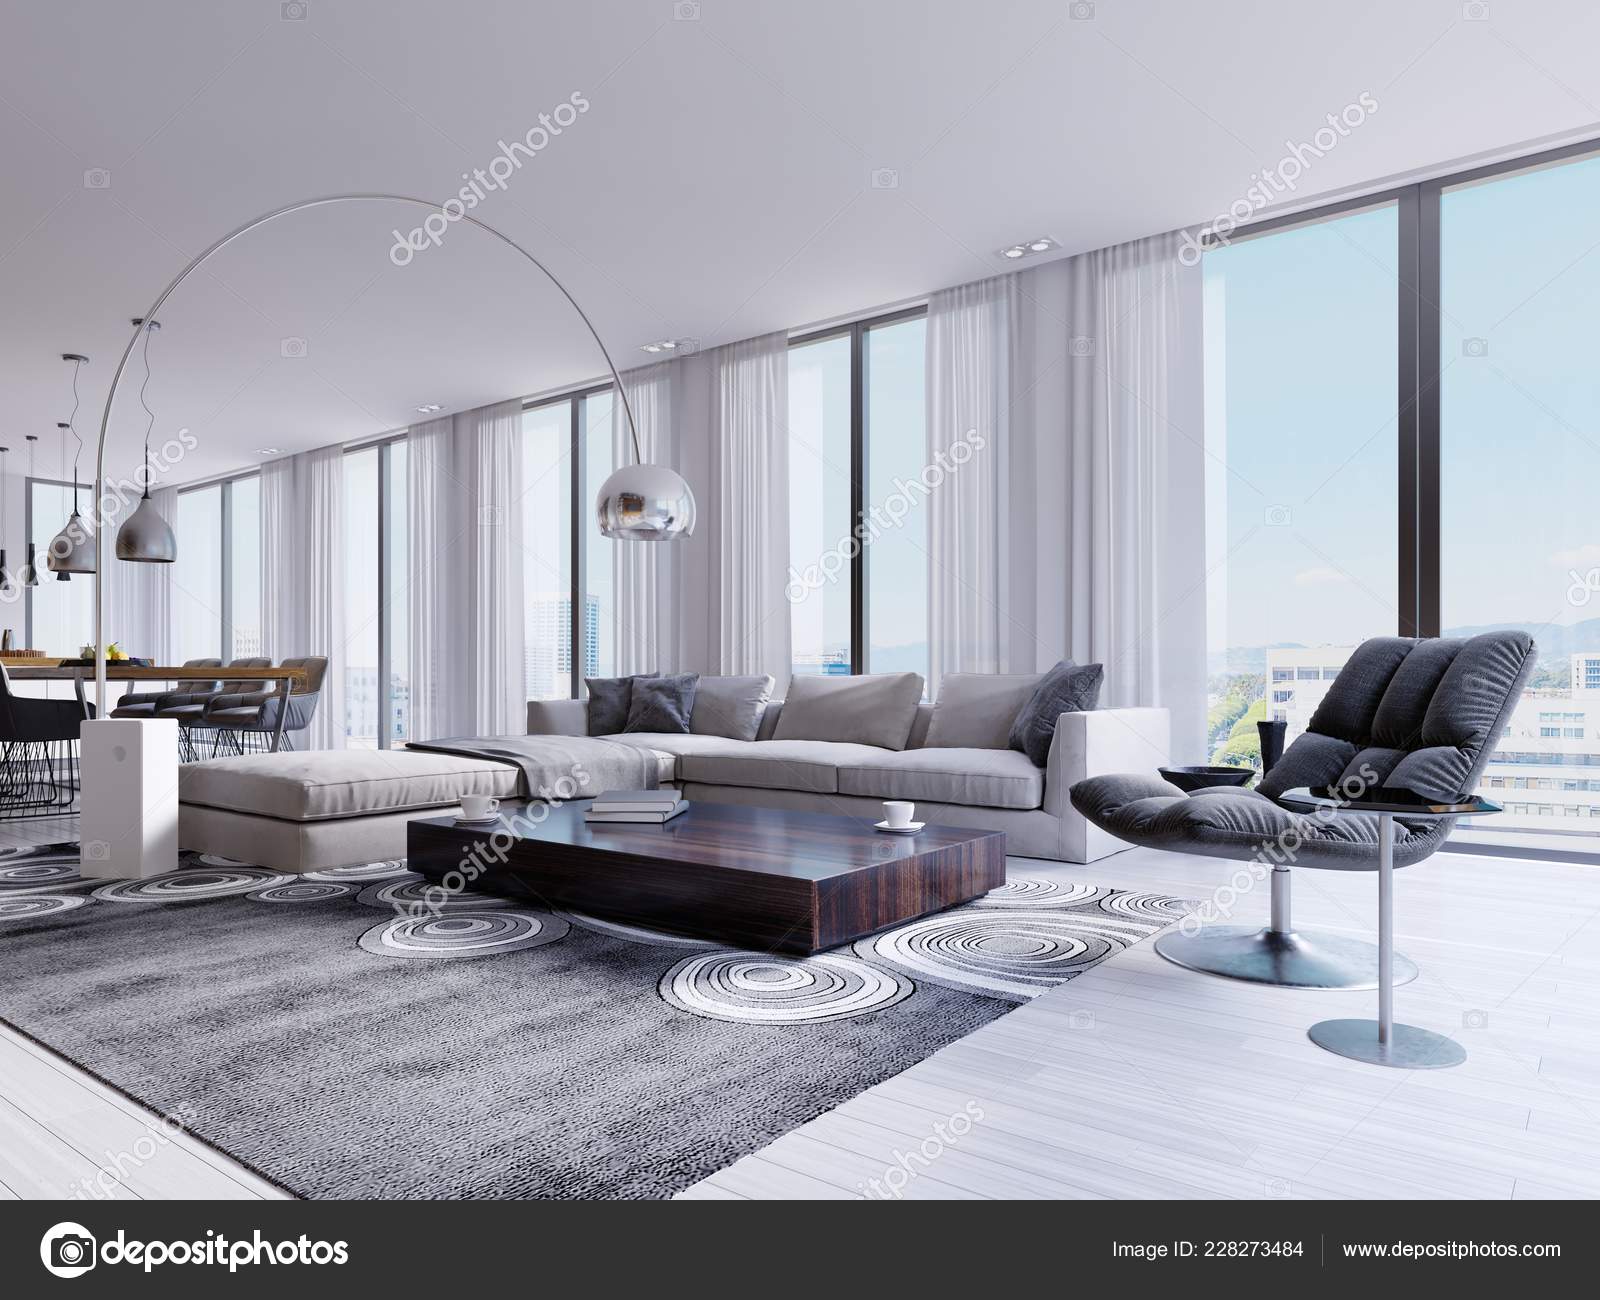 Modern Living Room Huge Windows Designer Armchair Dining Table Rendering Stock Photo Image By C Kuprin33 228273484